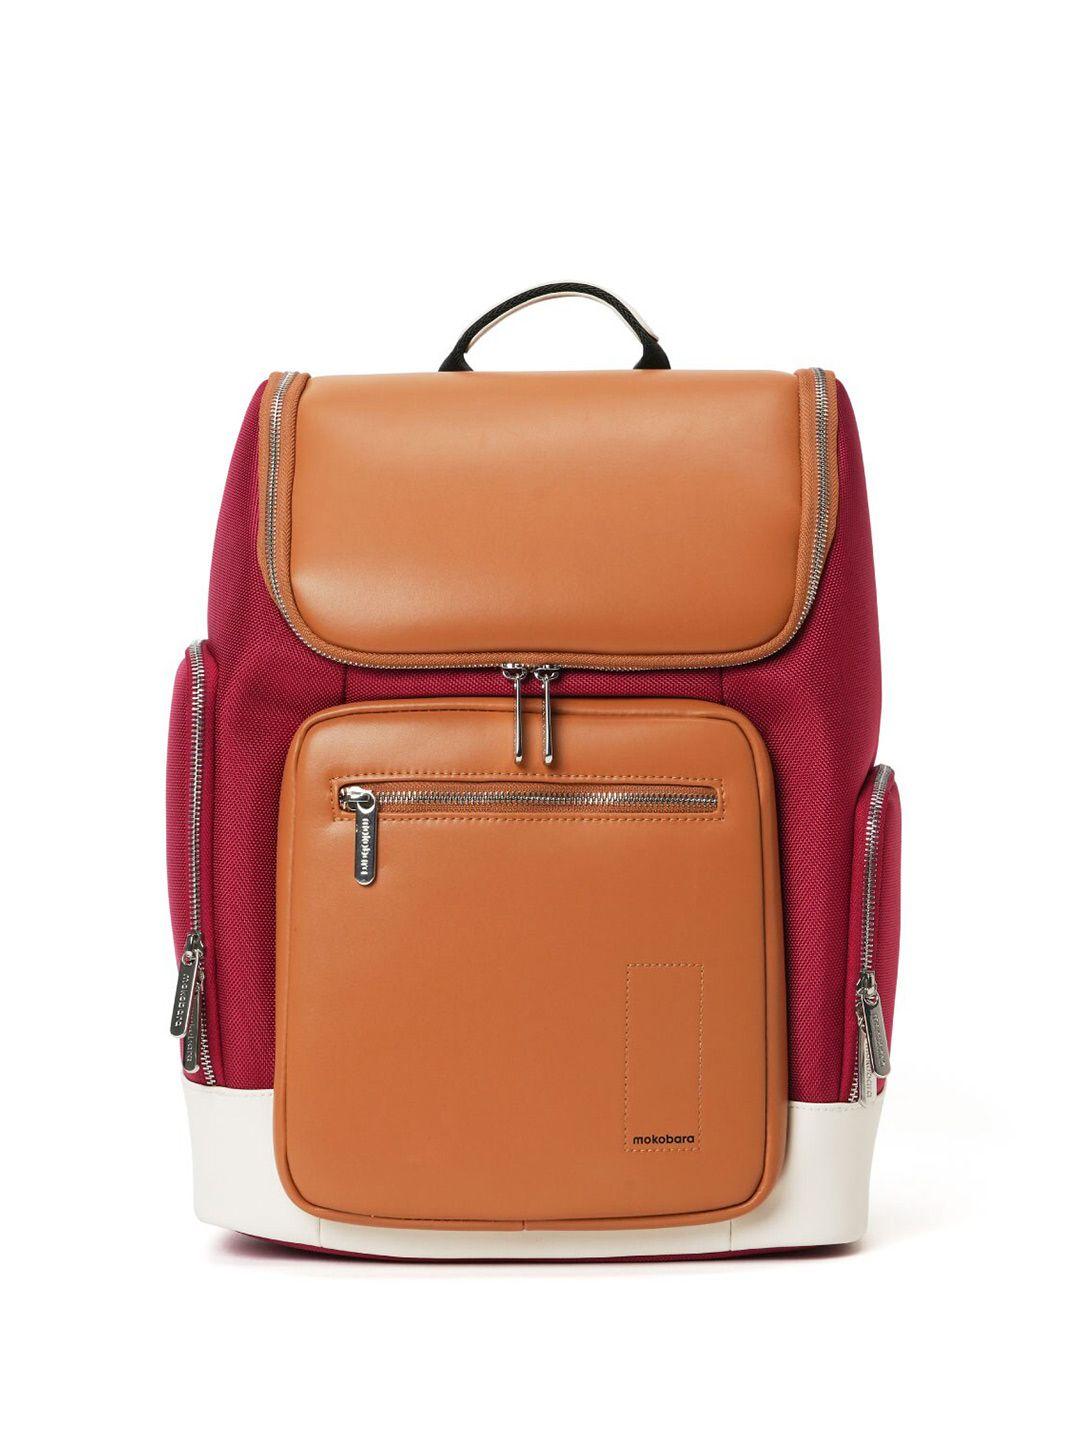 mokobara unisex colourblocked backpack up to 16 inch